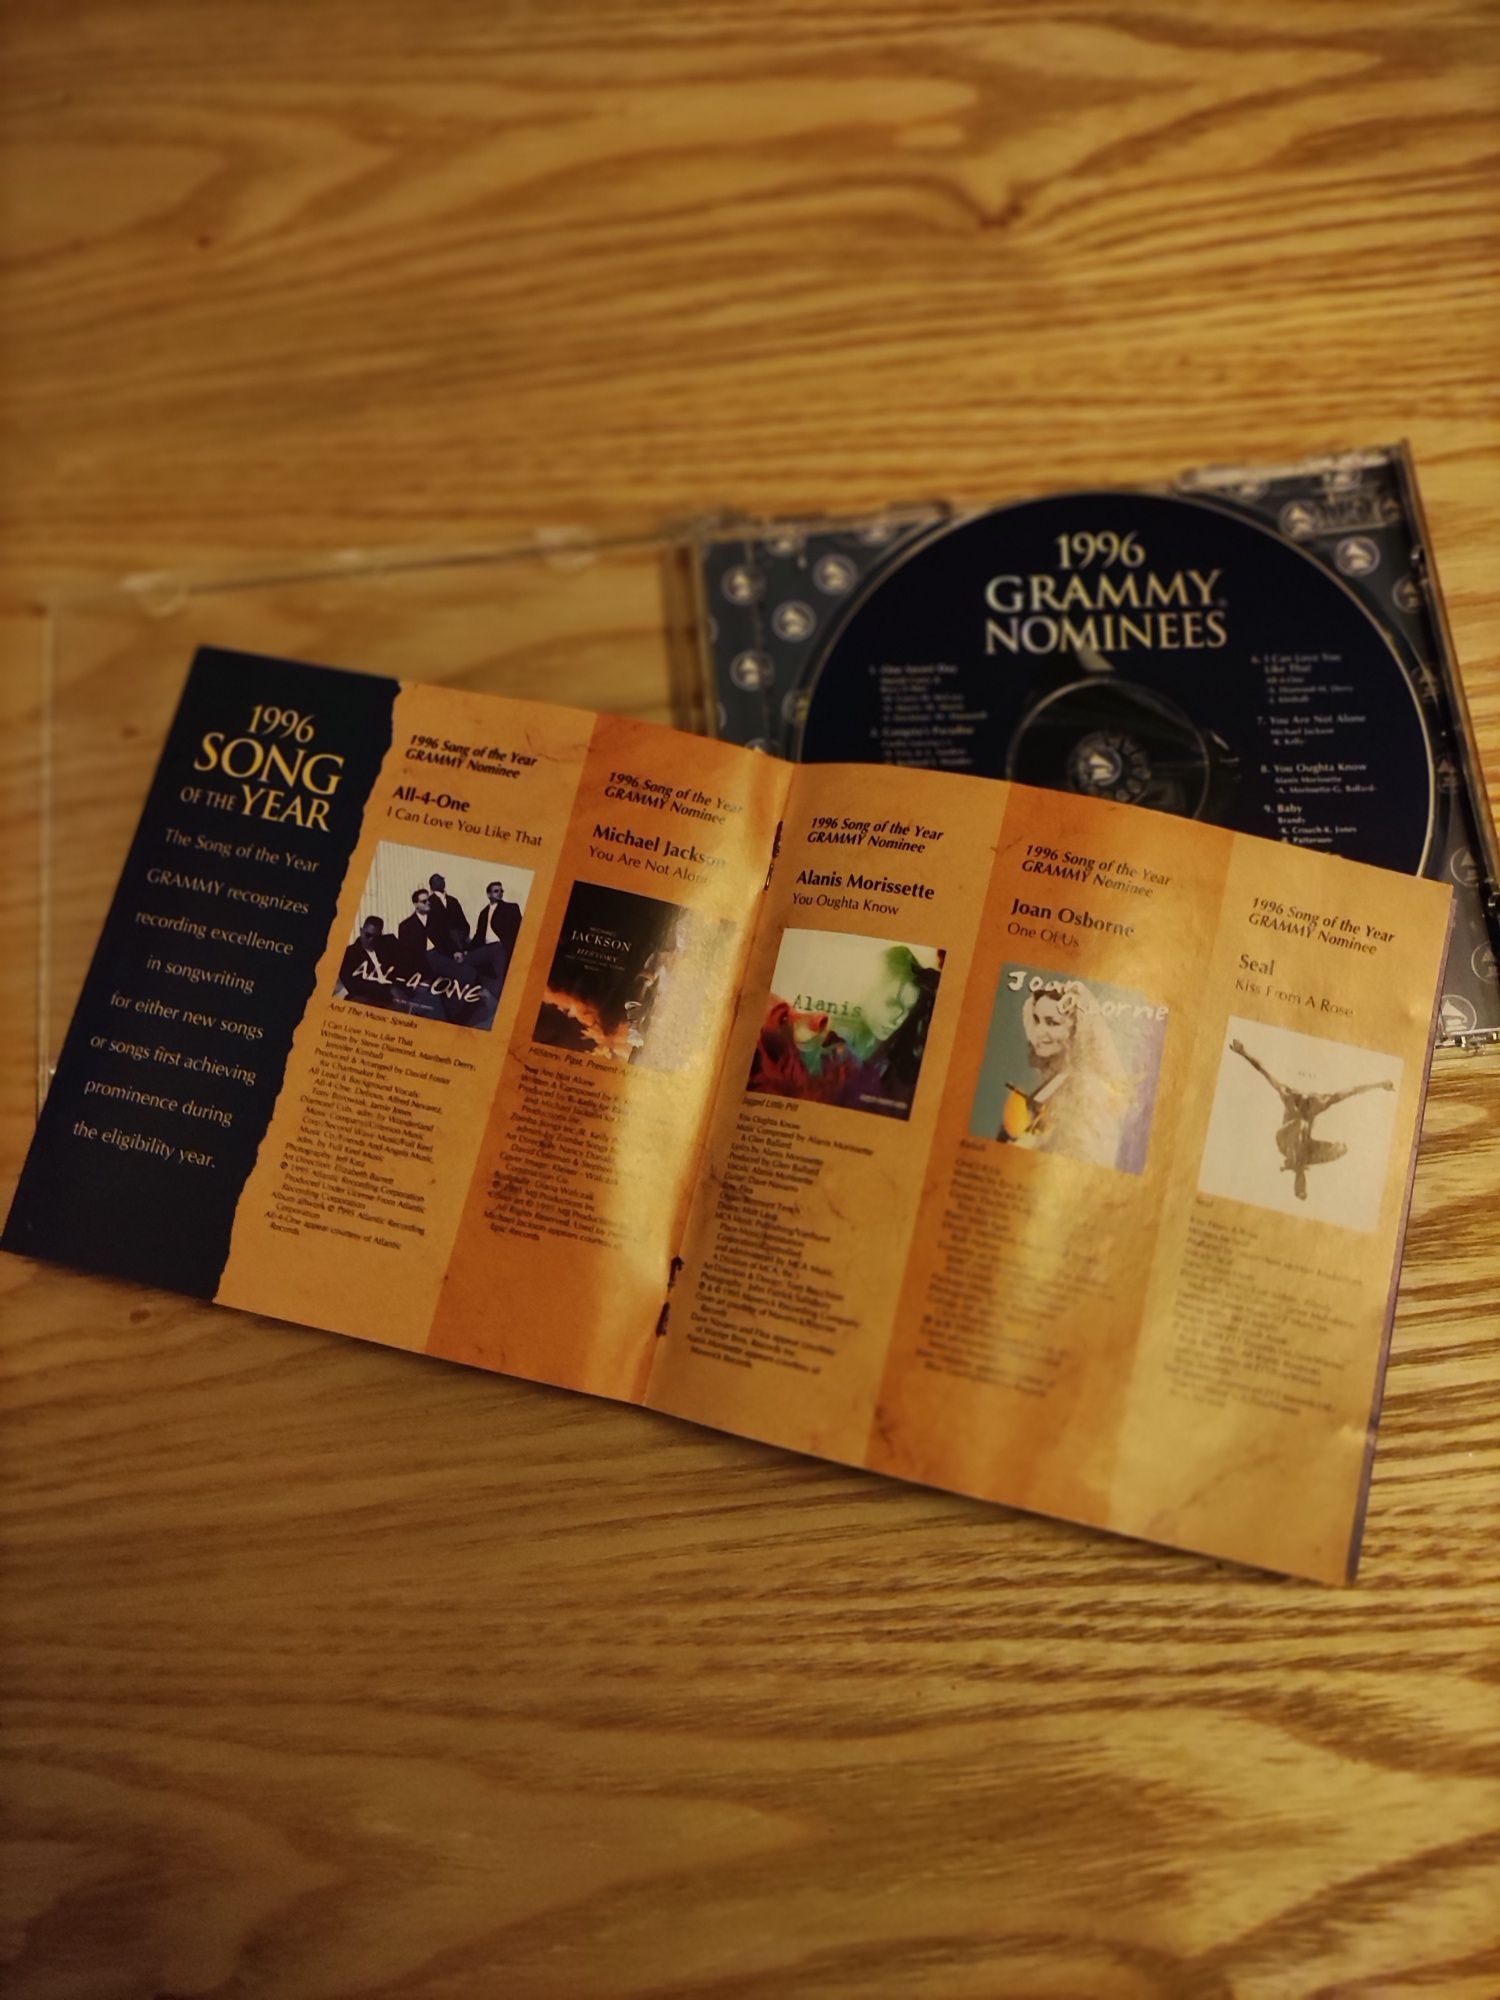 1996 Grammy Nominees (CD original)